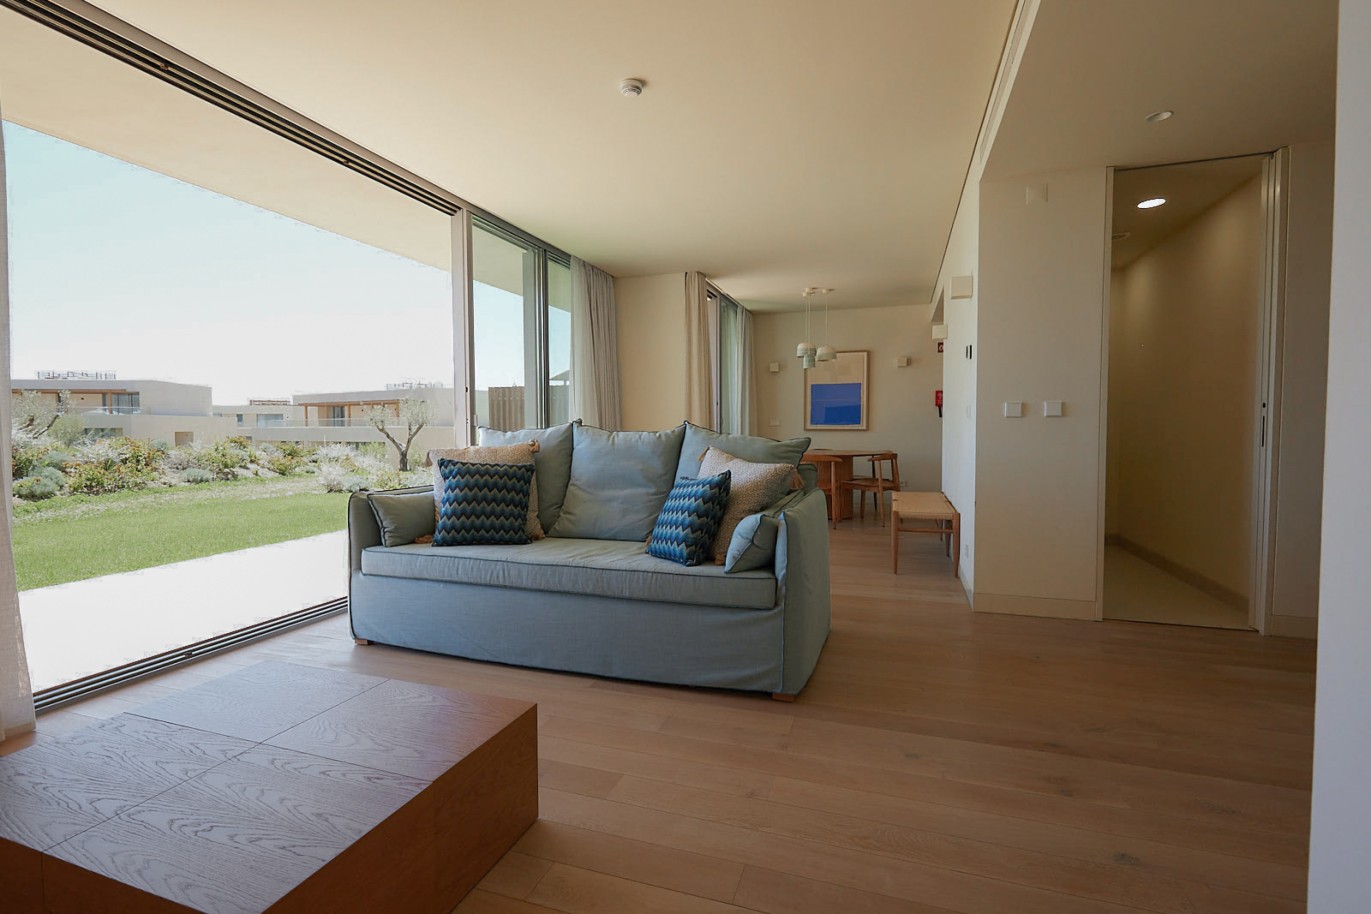 2 bedroom apartment in resort, for sale in Porches, Algarve_229148